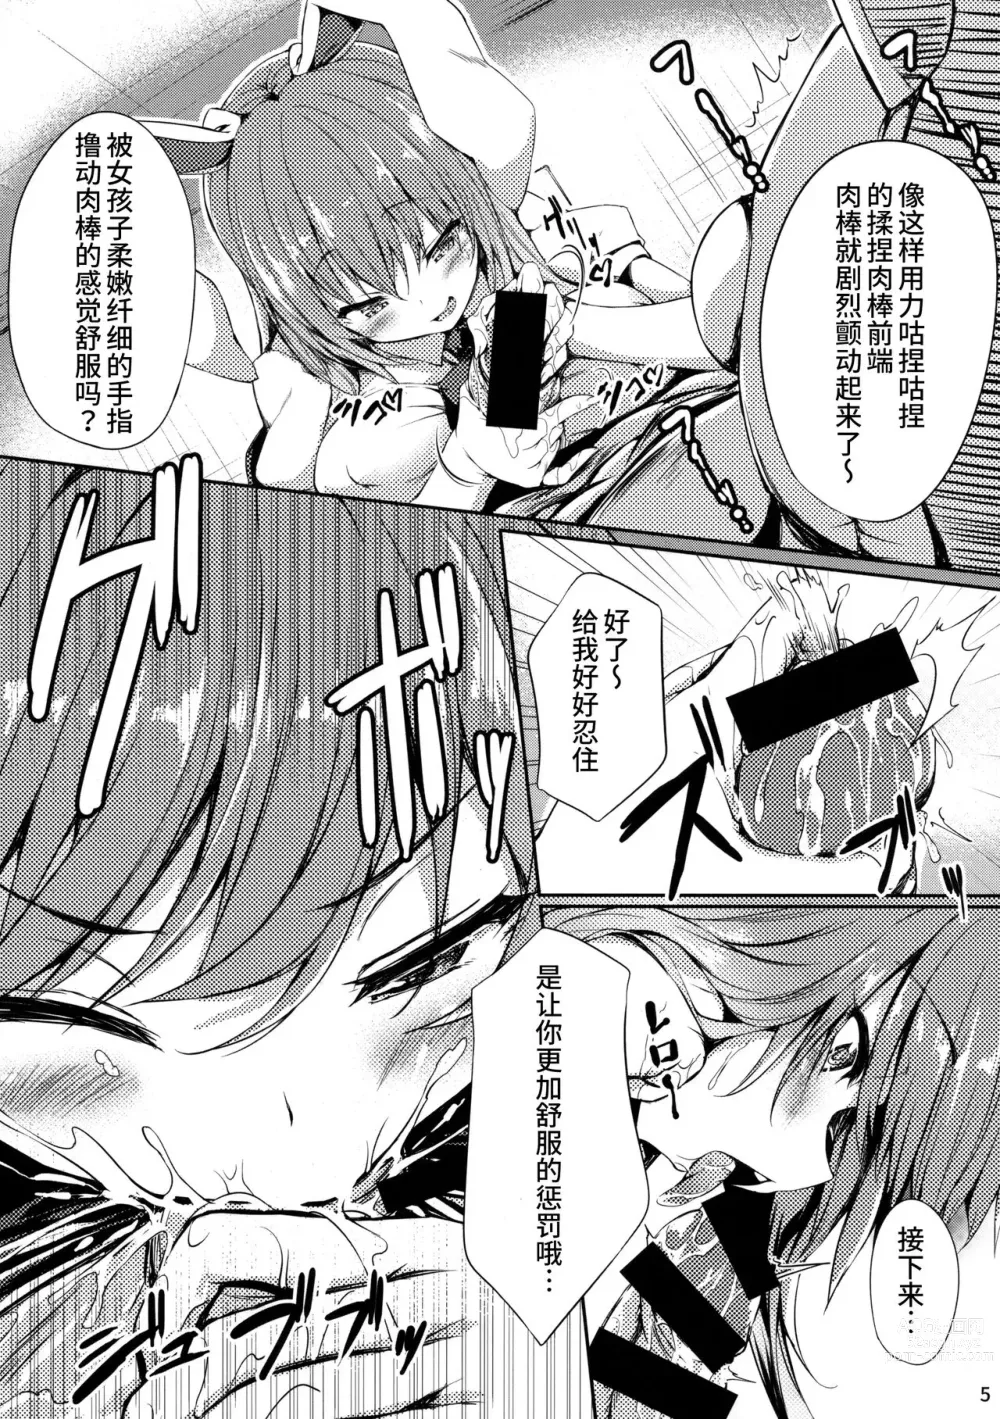 Page 6 of doujinshi 对狂妄的小兔子要大力惩罚！